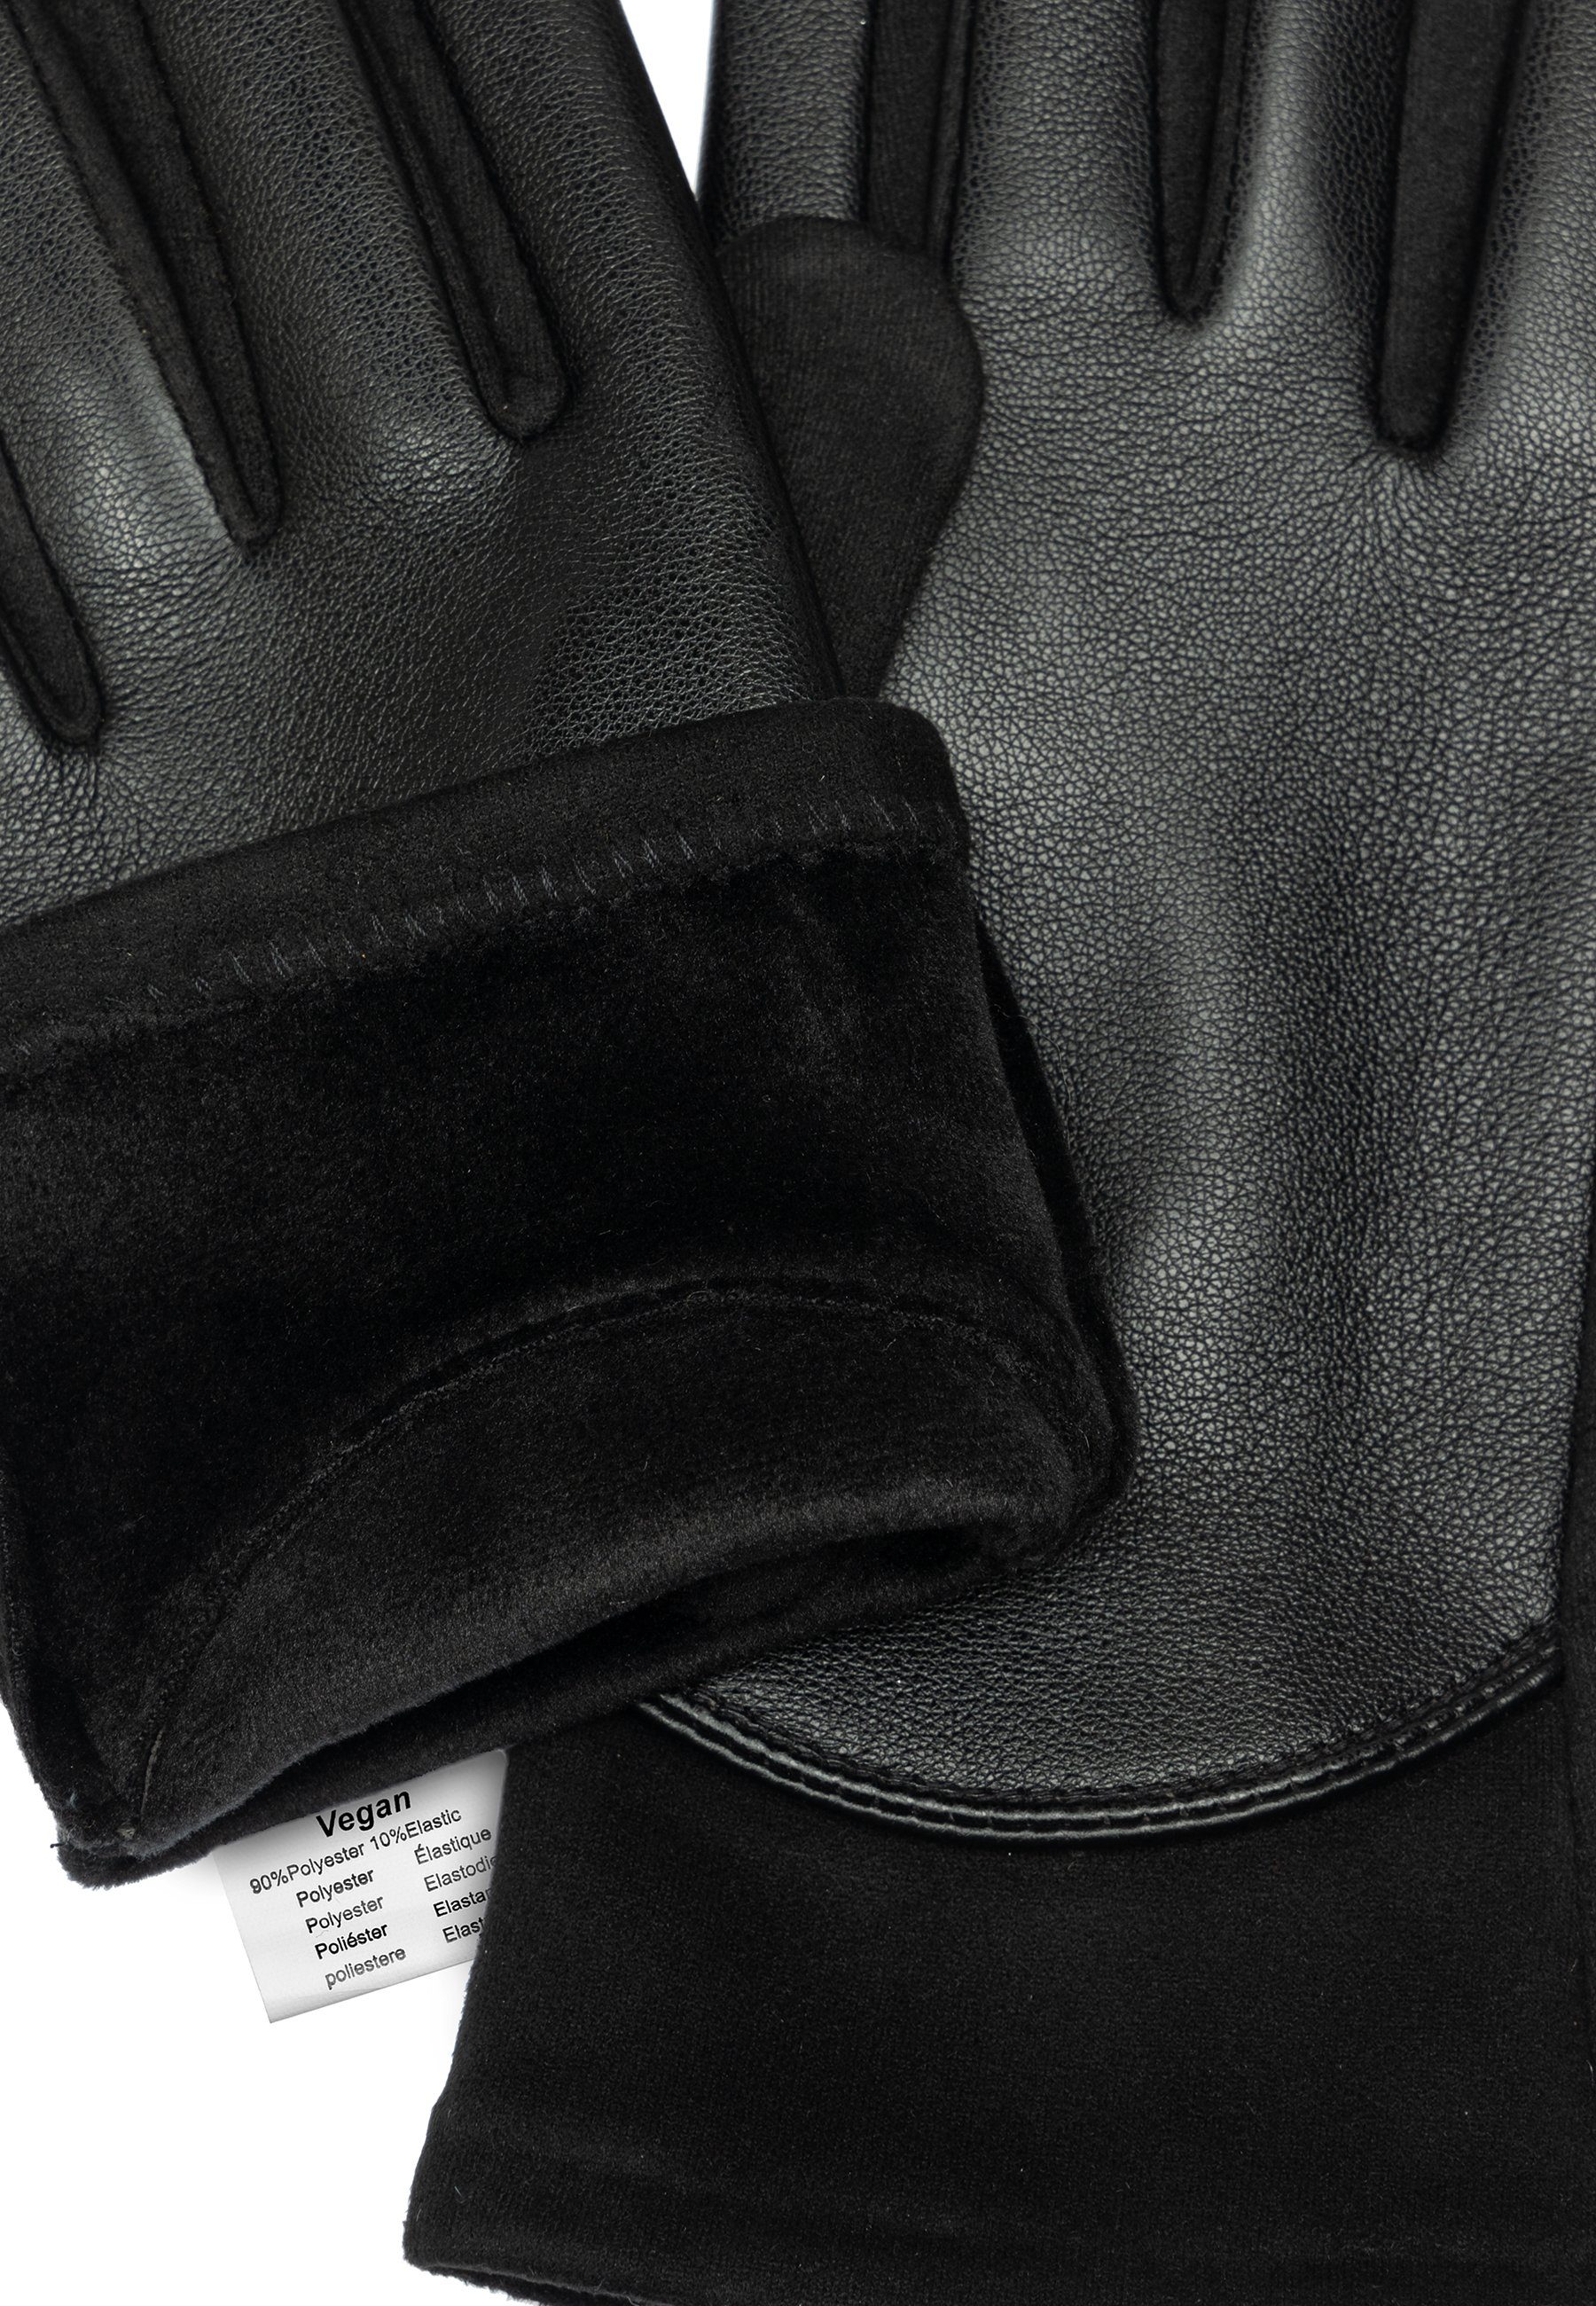 schwarz uni GLV016 Damen Strickhandschuhe Caspar klassisch Handschuhe elegante